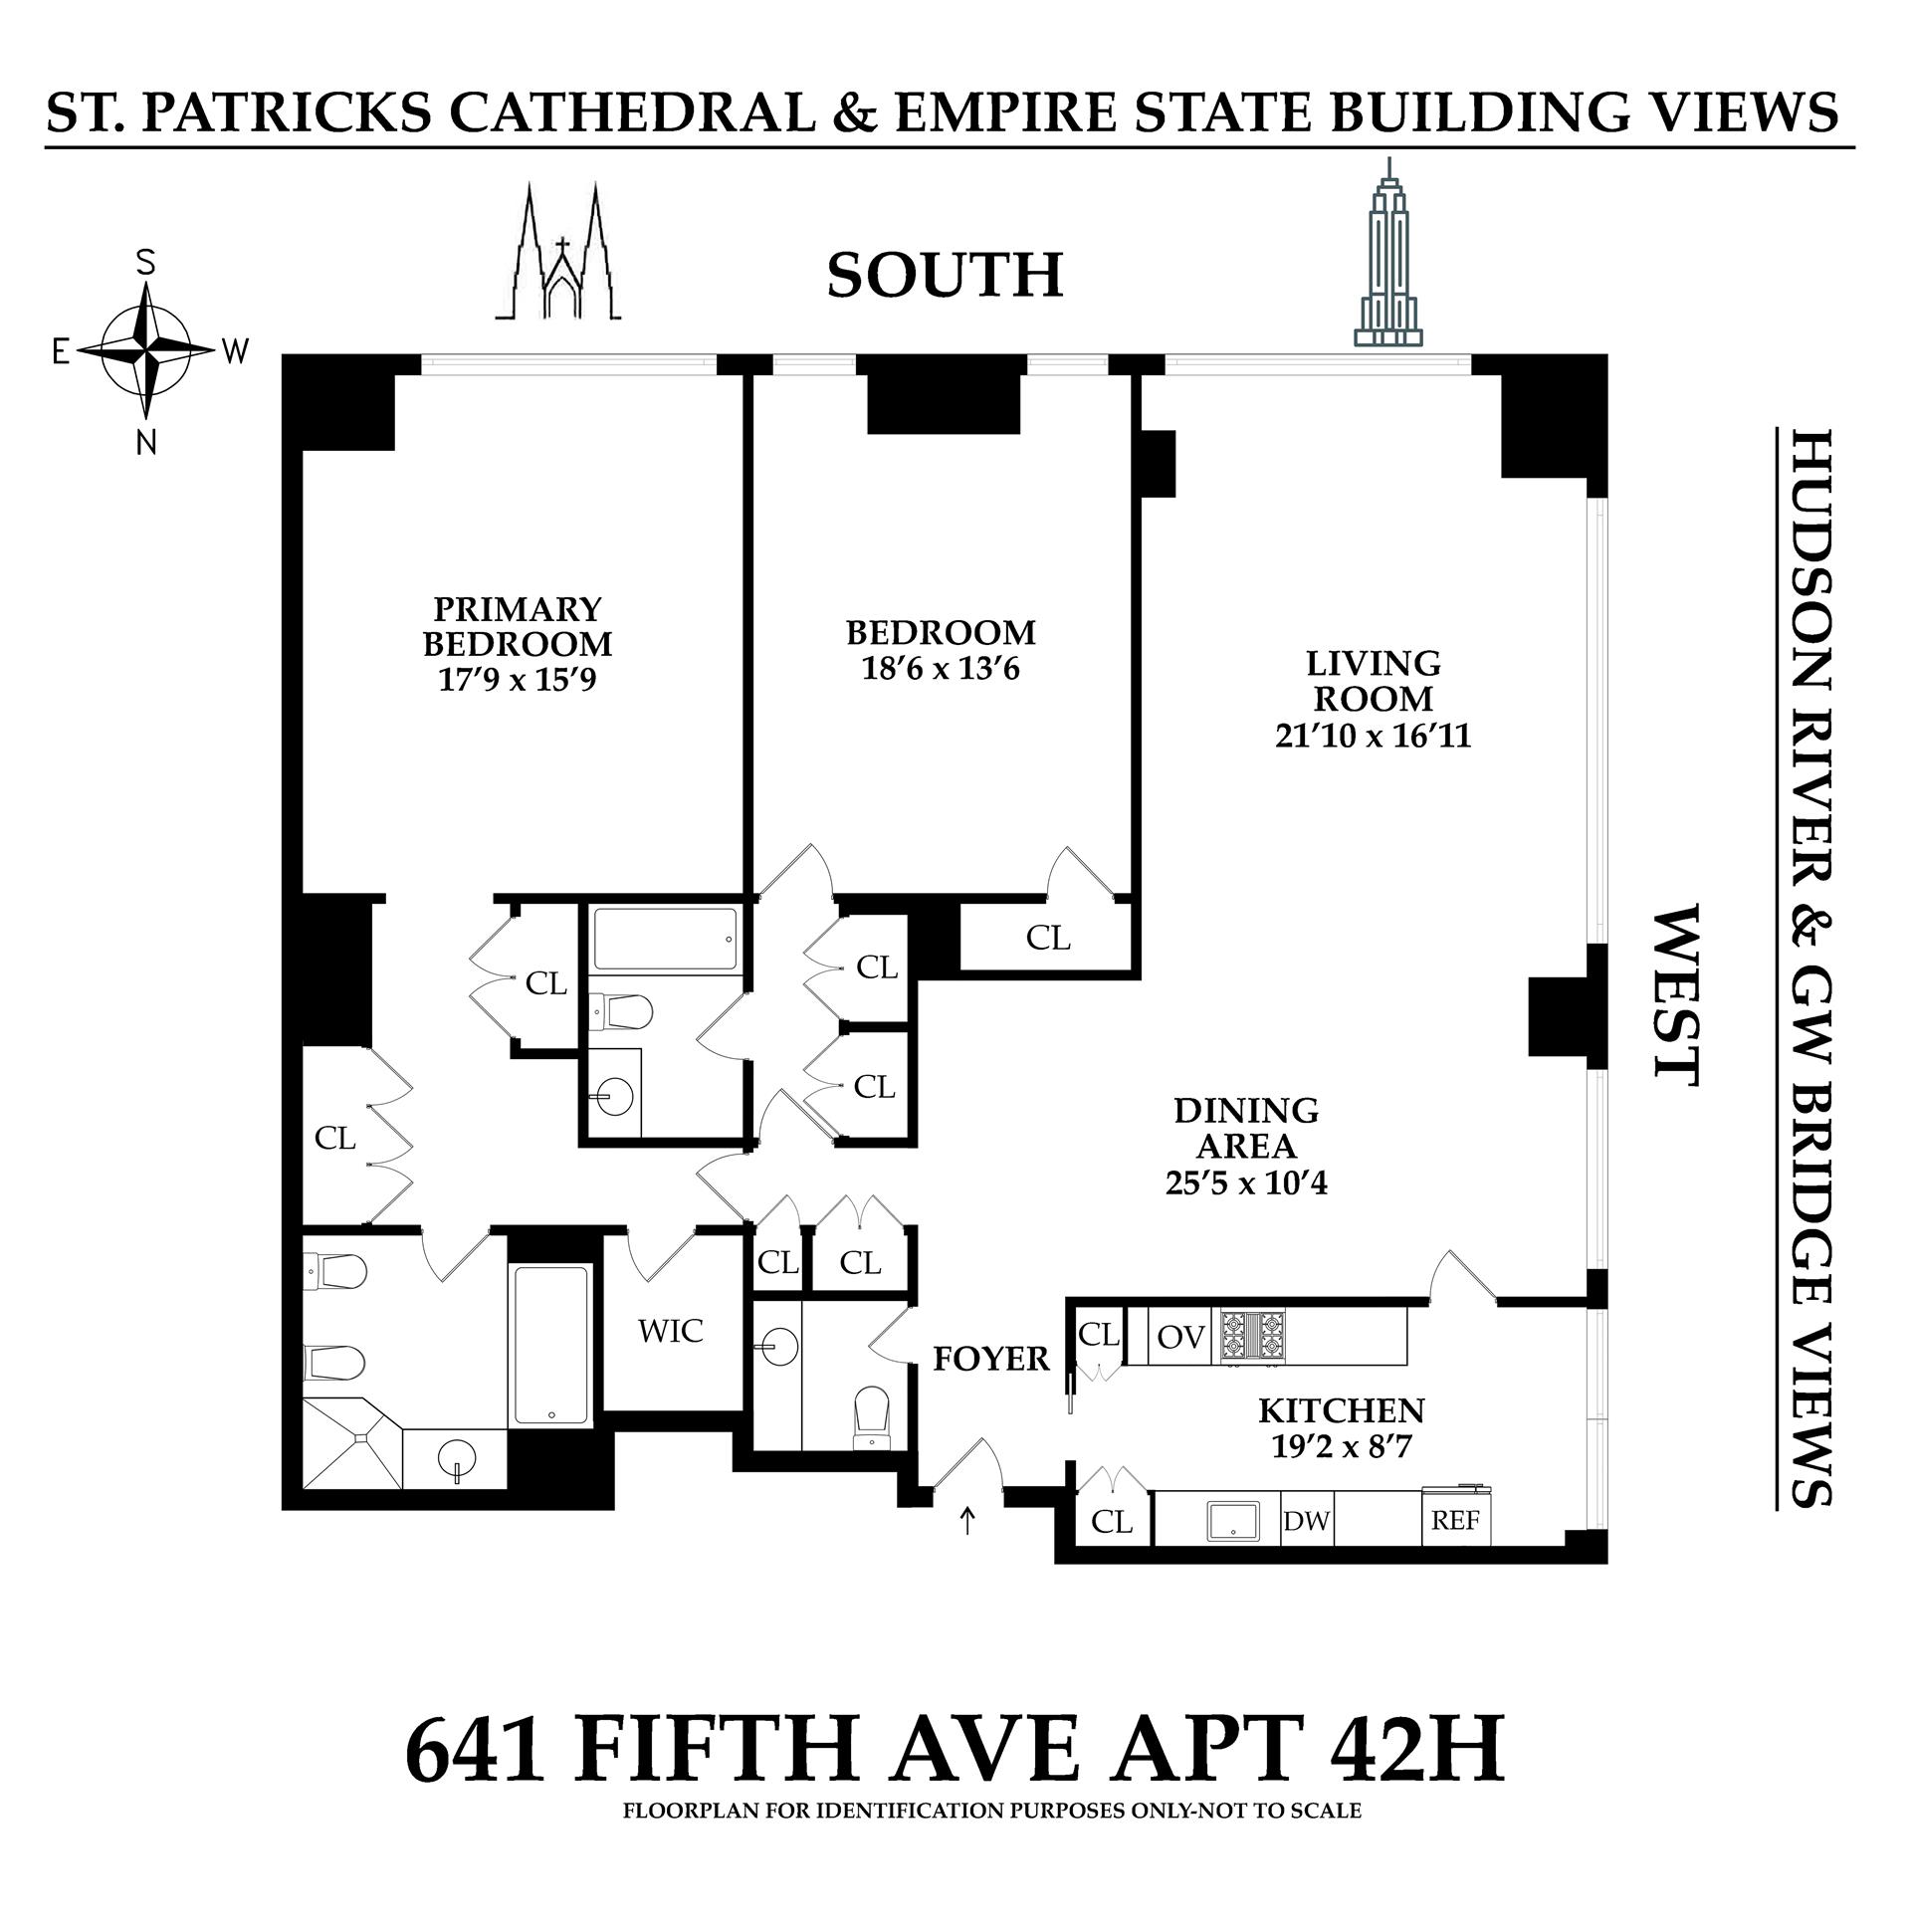 Floorplan for 641 5th Avenue, 42H